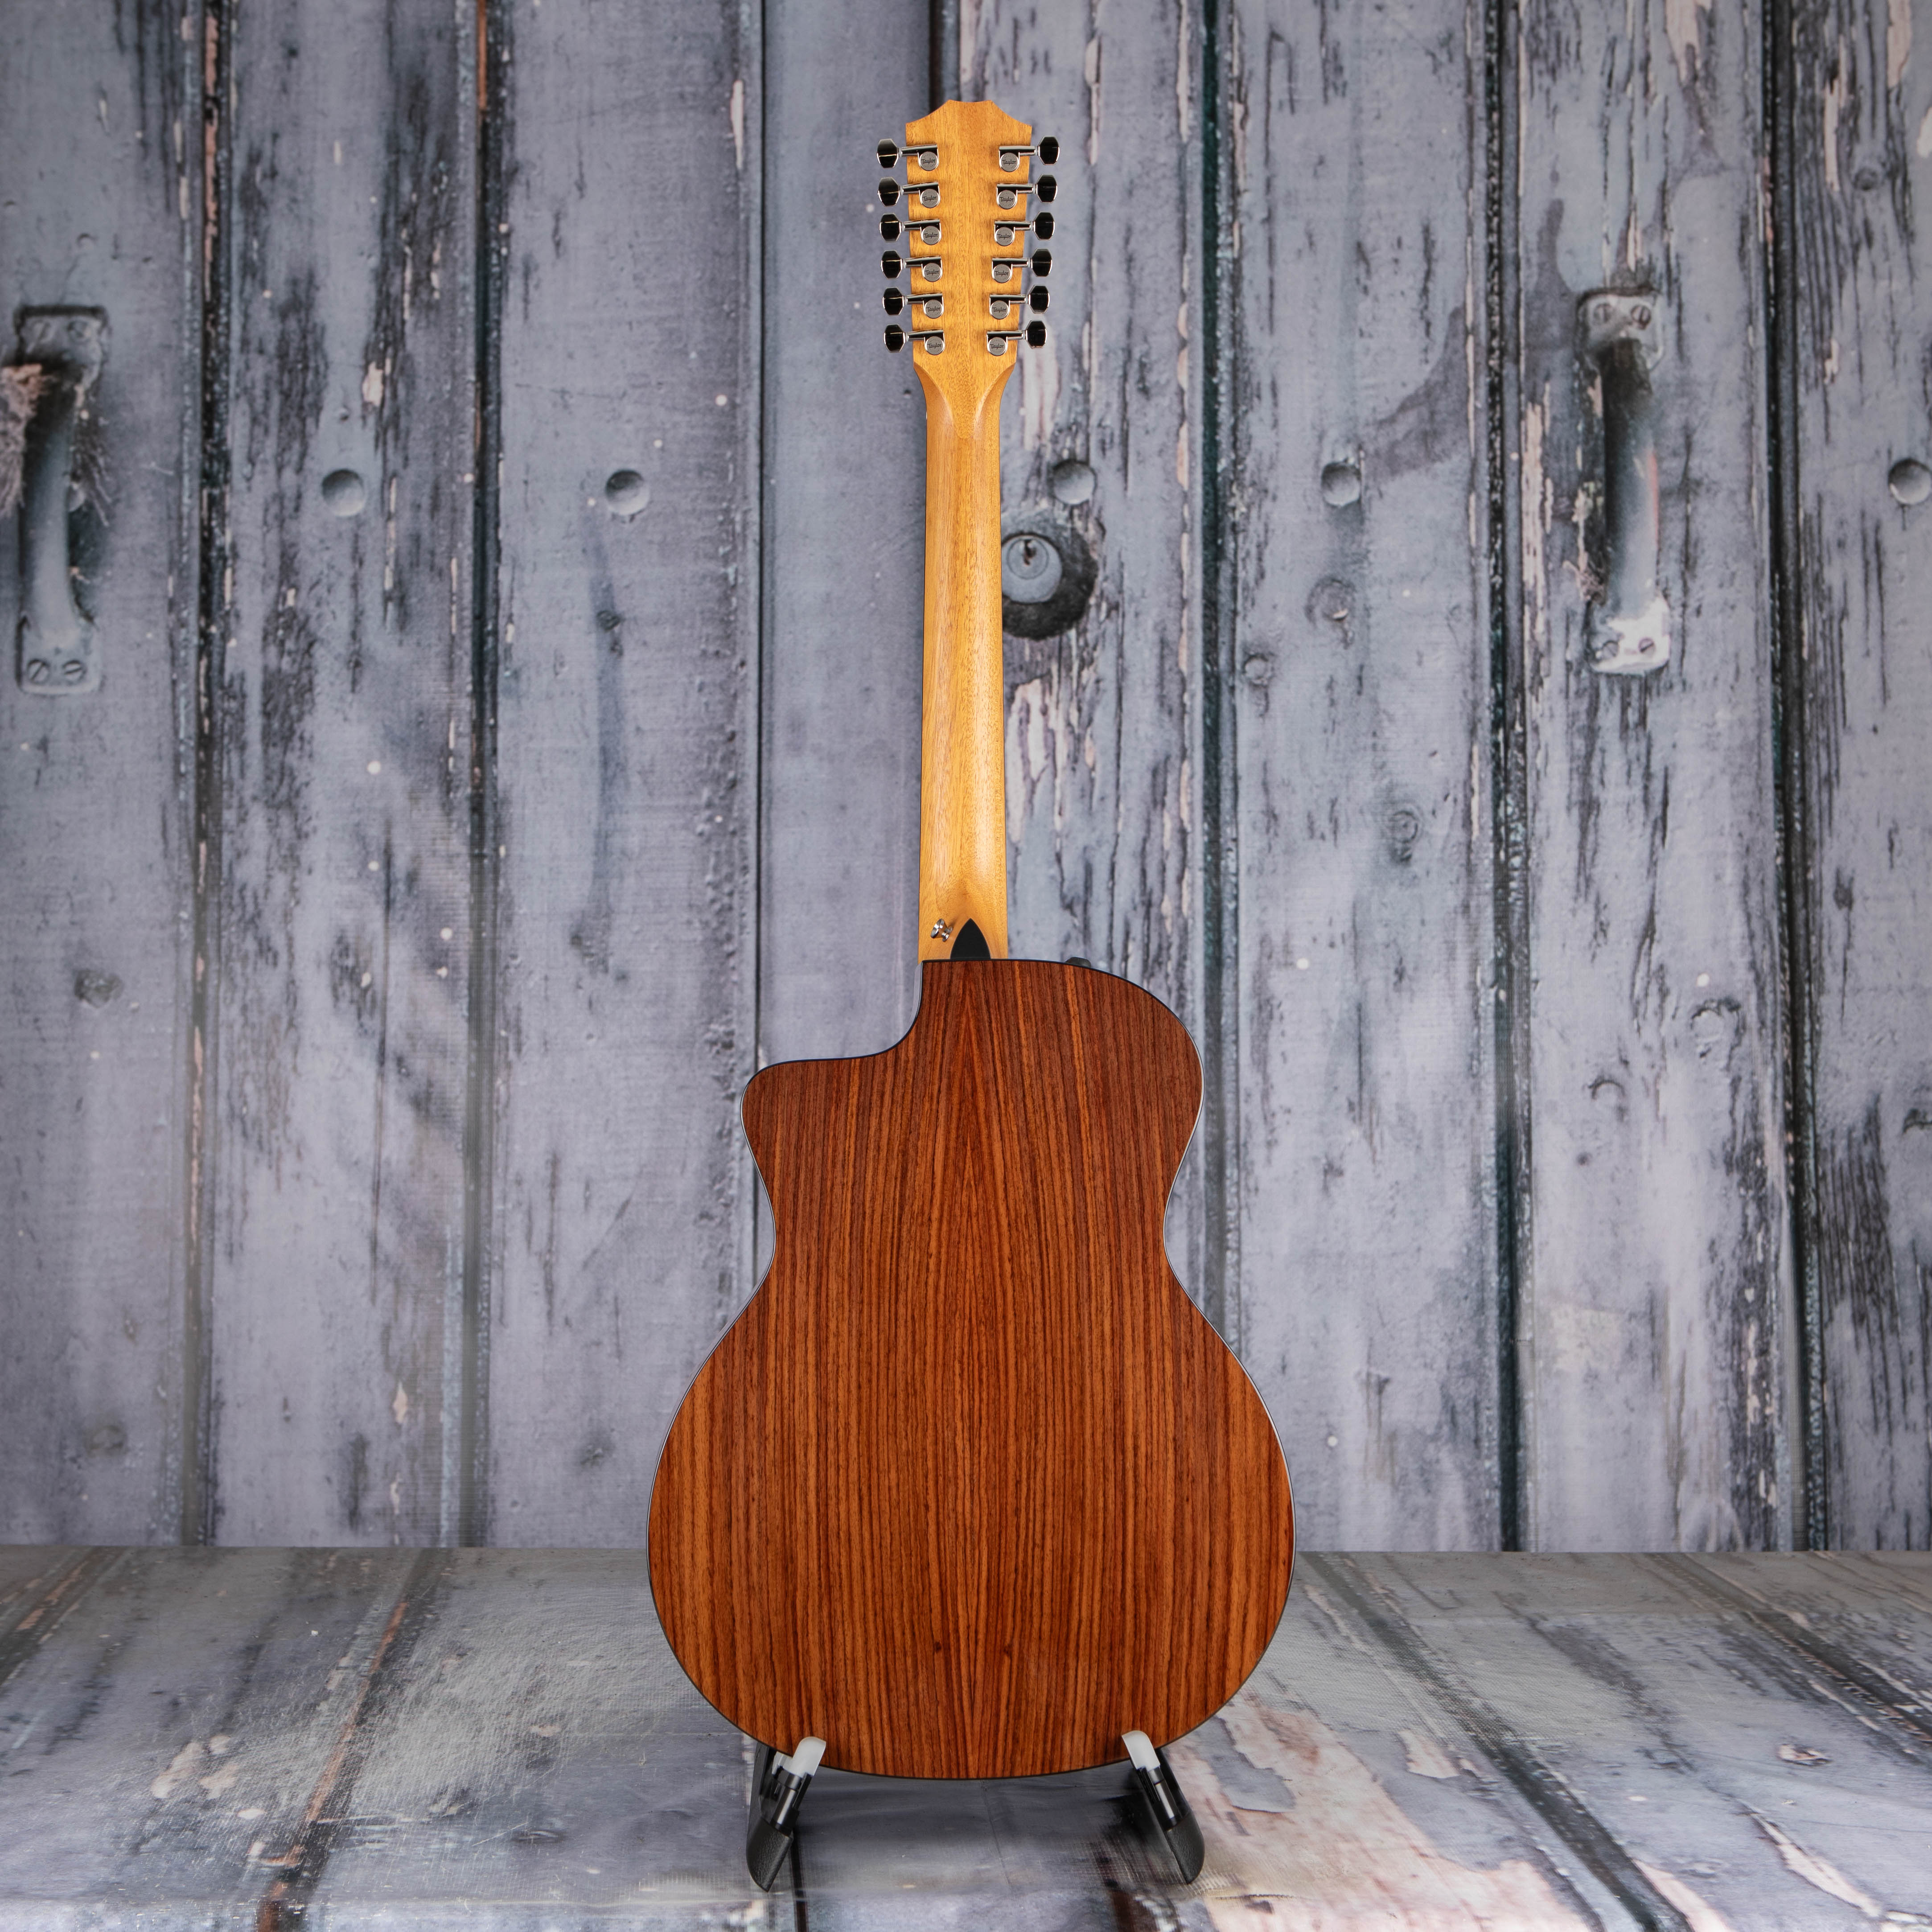 Taylor 254ce Plus 12-String Acoustic/Electric Guitar, Natural, back